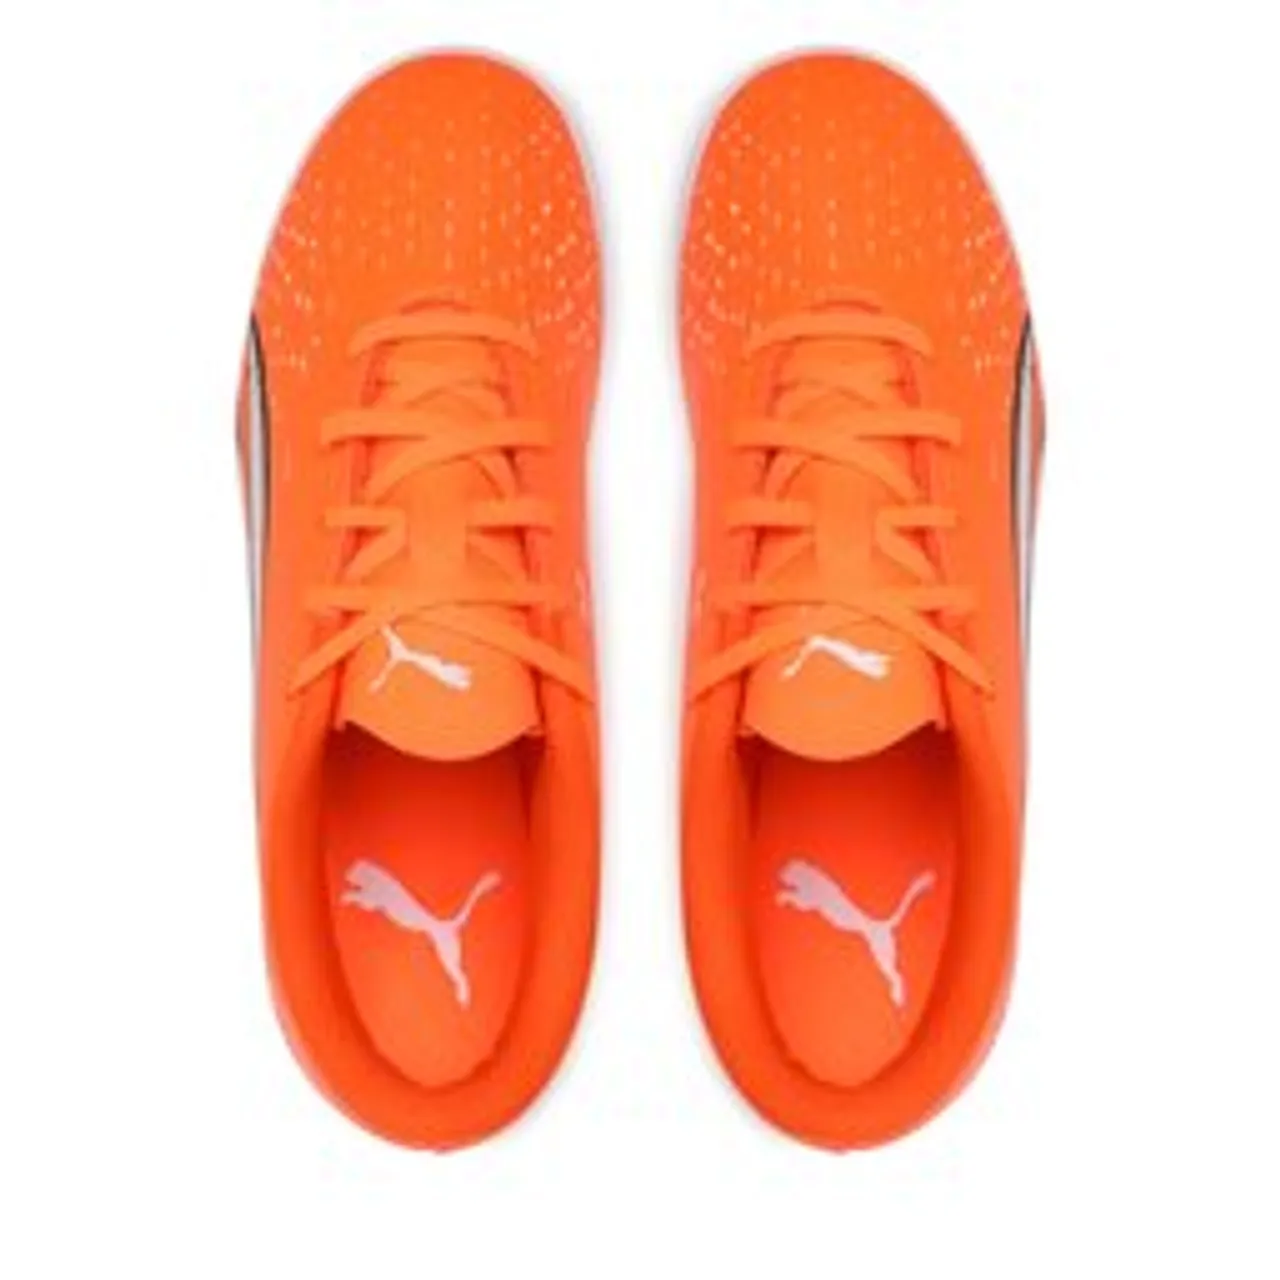 Schuhe Puma Ultra Play It Jr 107237 01 Orange/White/Blue